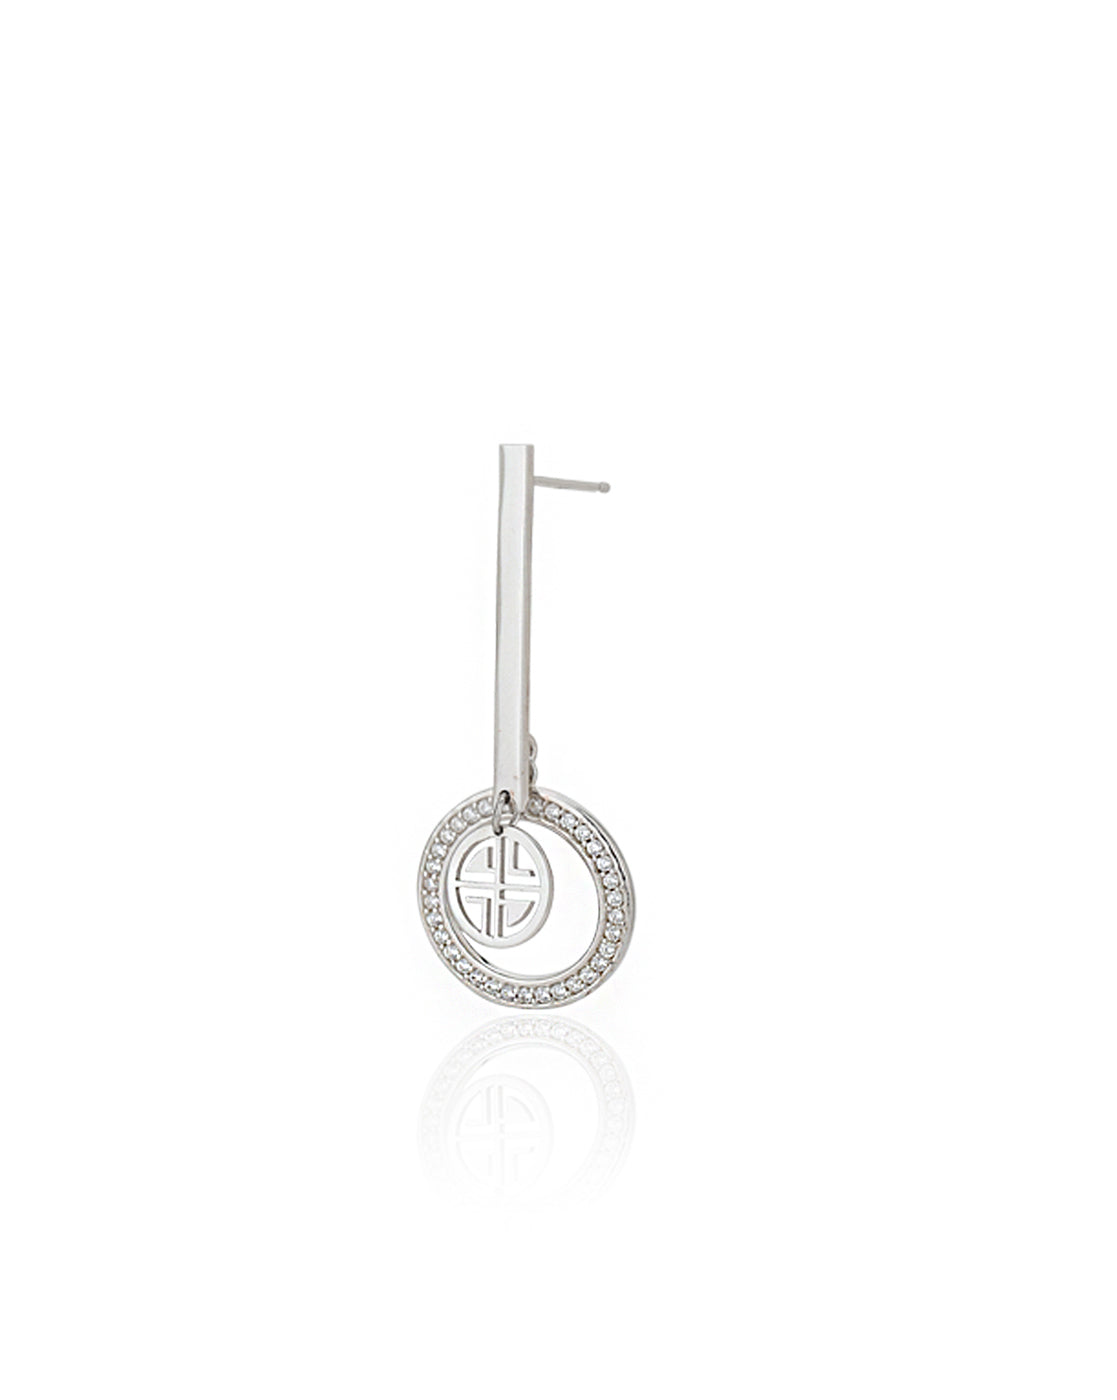 Carlton London 925 Sterling Silver Rhodium Plated Cz Circular Drop Earring For Women